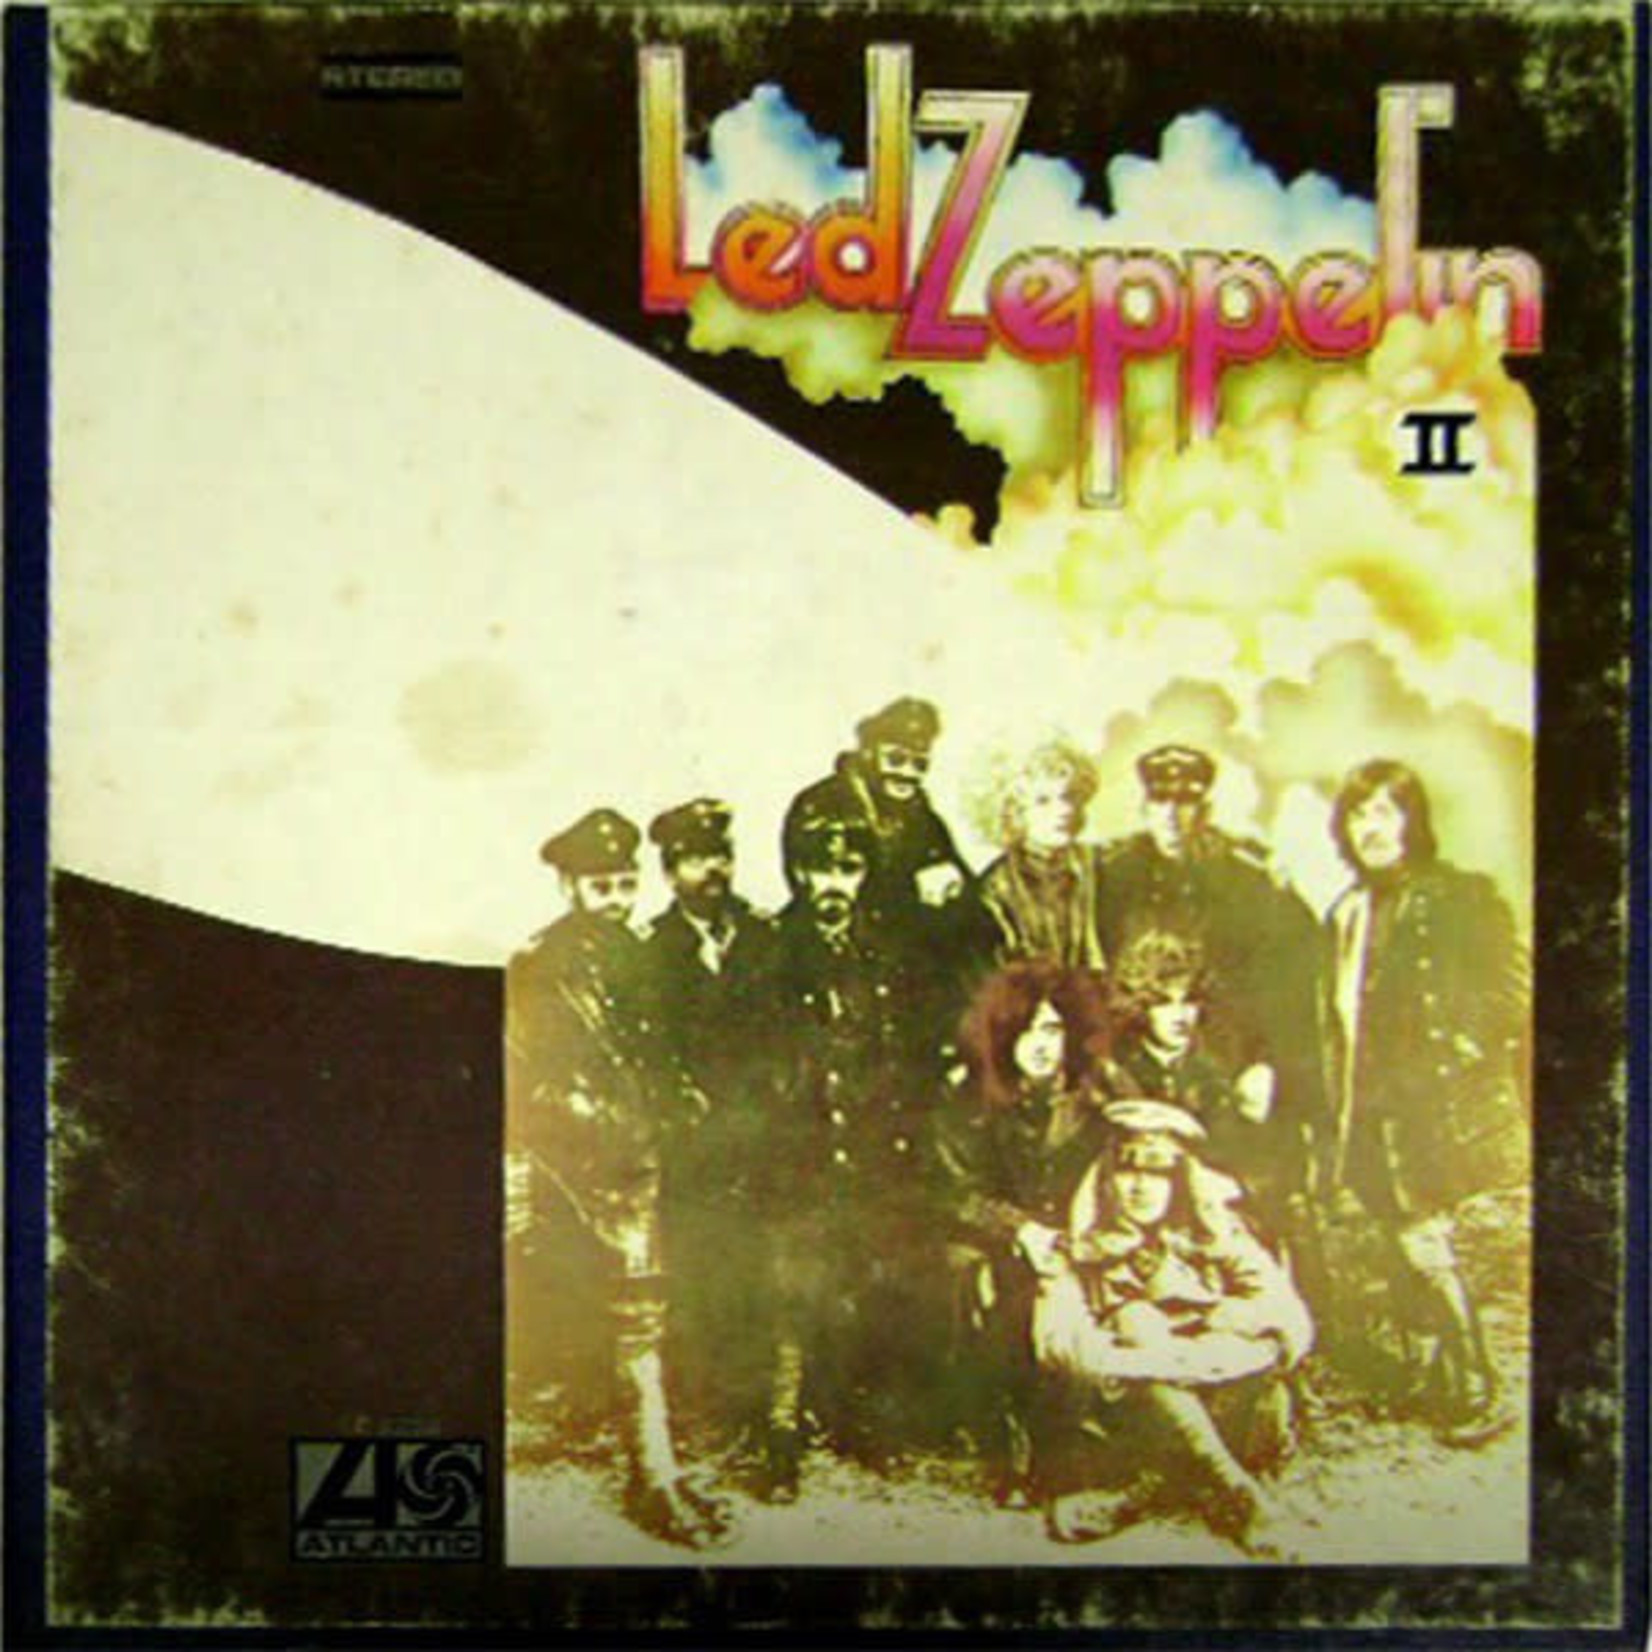 Accessory Led Zeppelin - I, II, III   [Reel to Reel Collection]